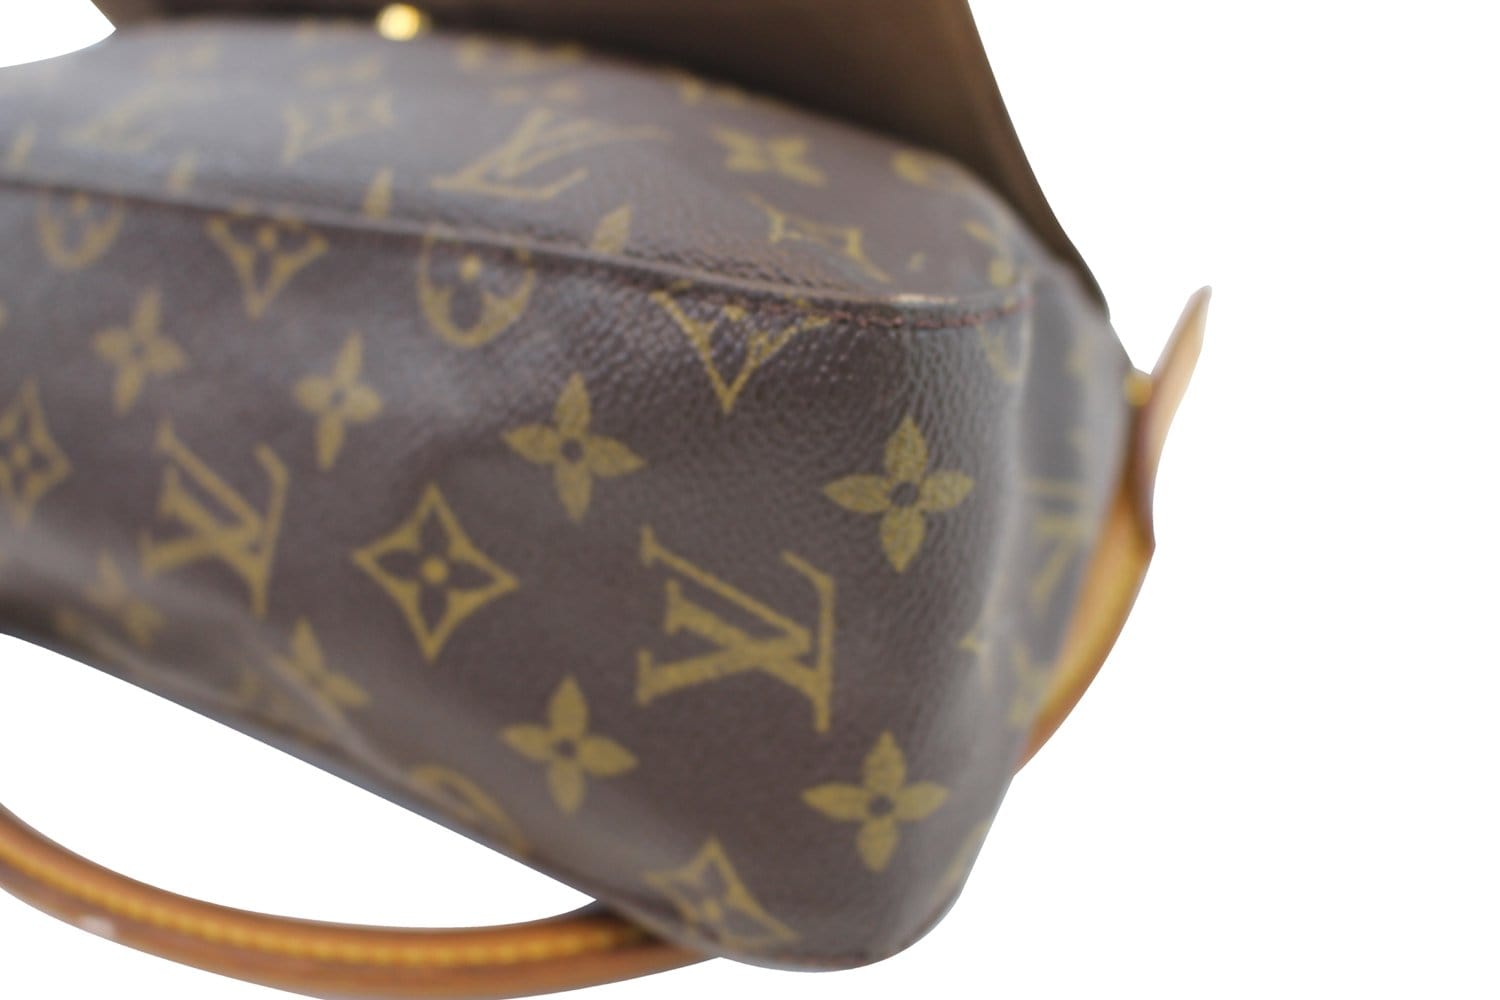 Louis Vuitton Monogram Canvas Looping Shoulder Bag PM